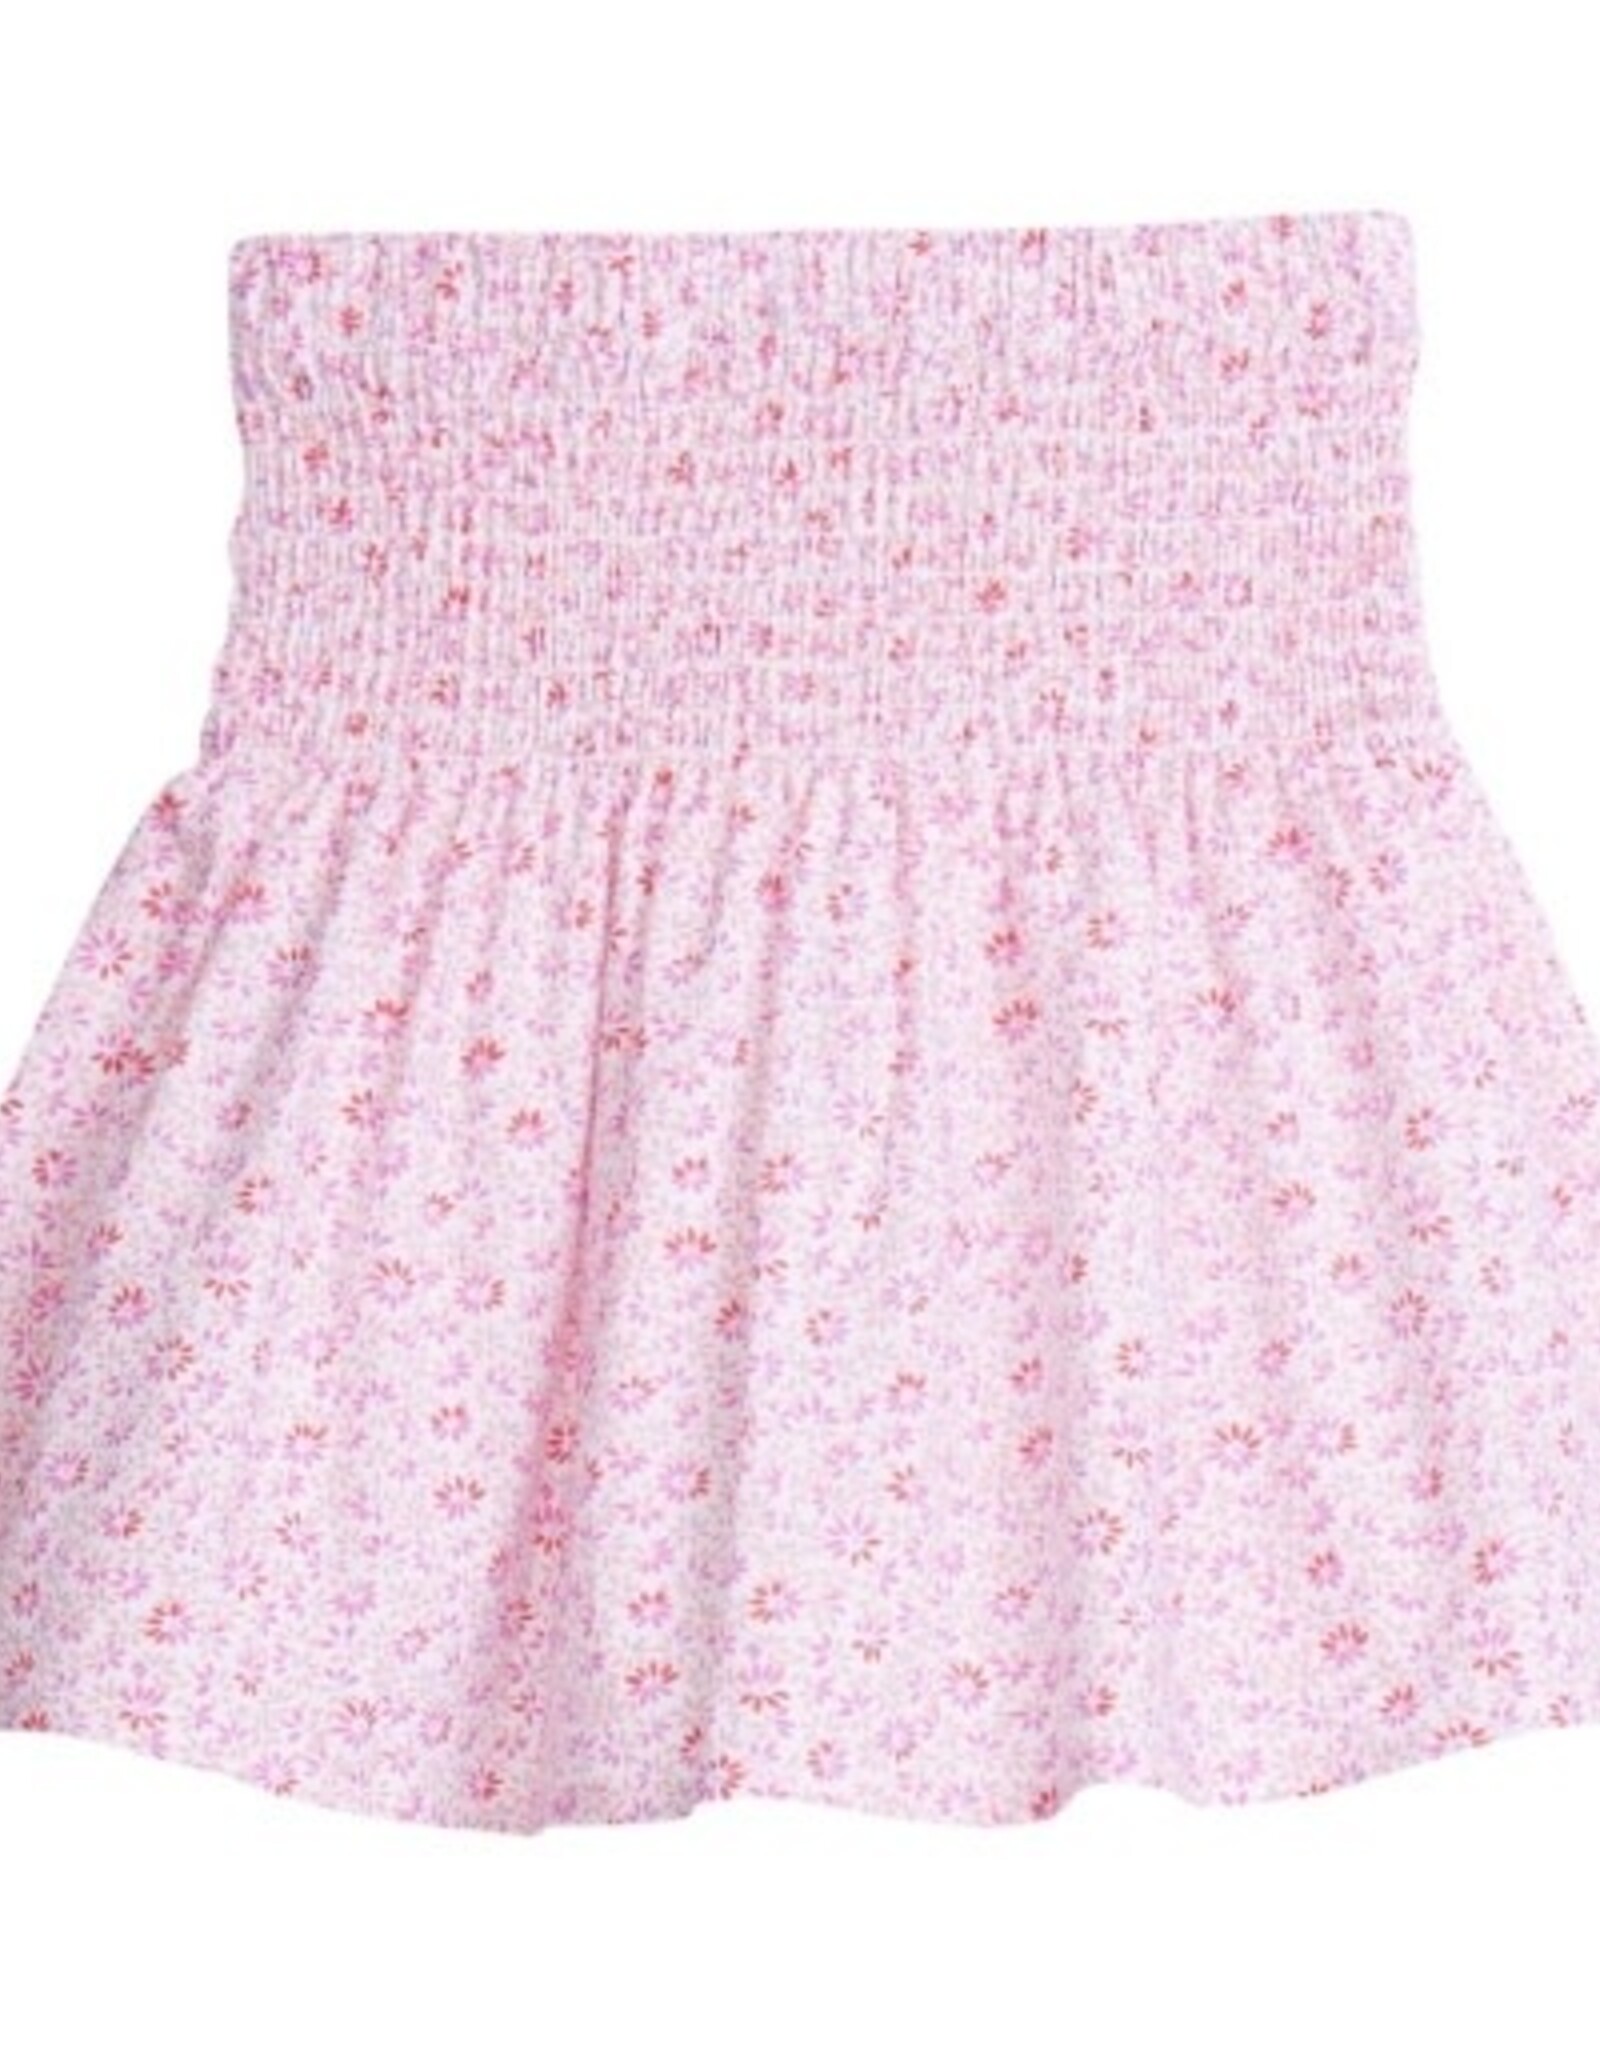 Bisby Shirred Circle Skirt, Pink Daisy